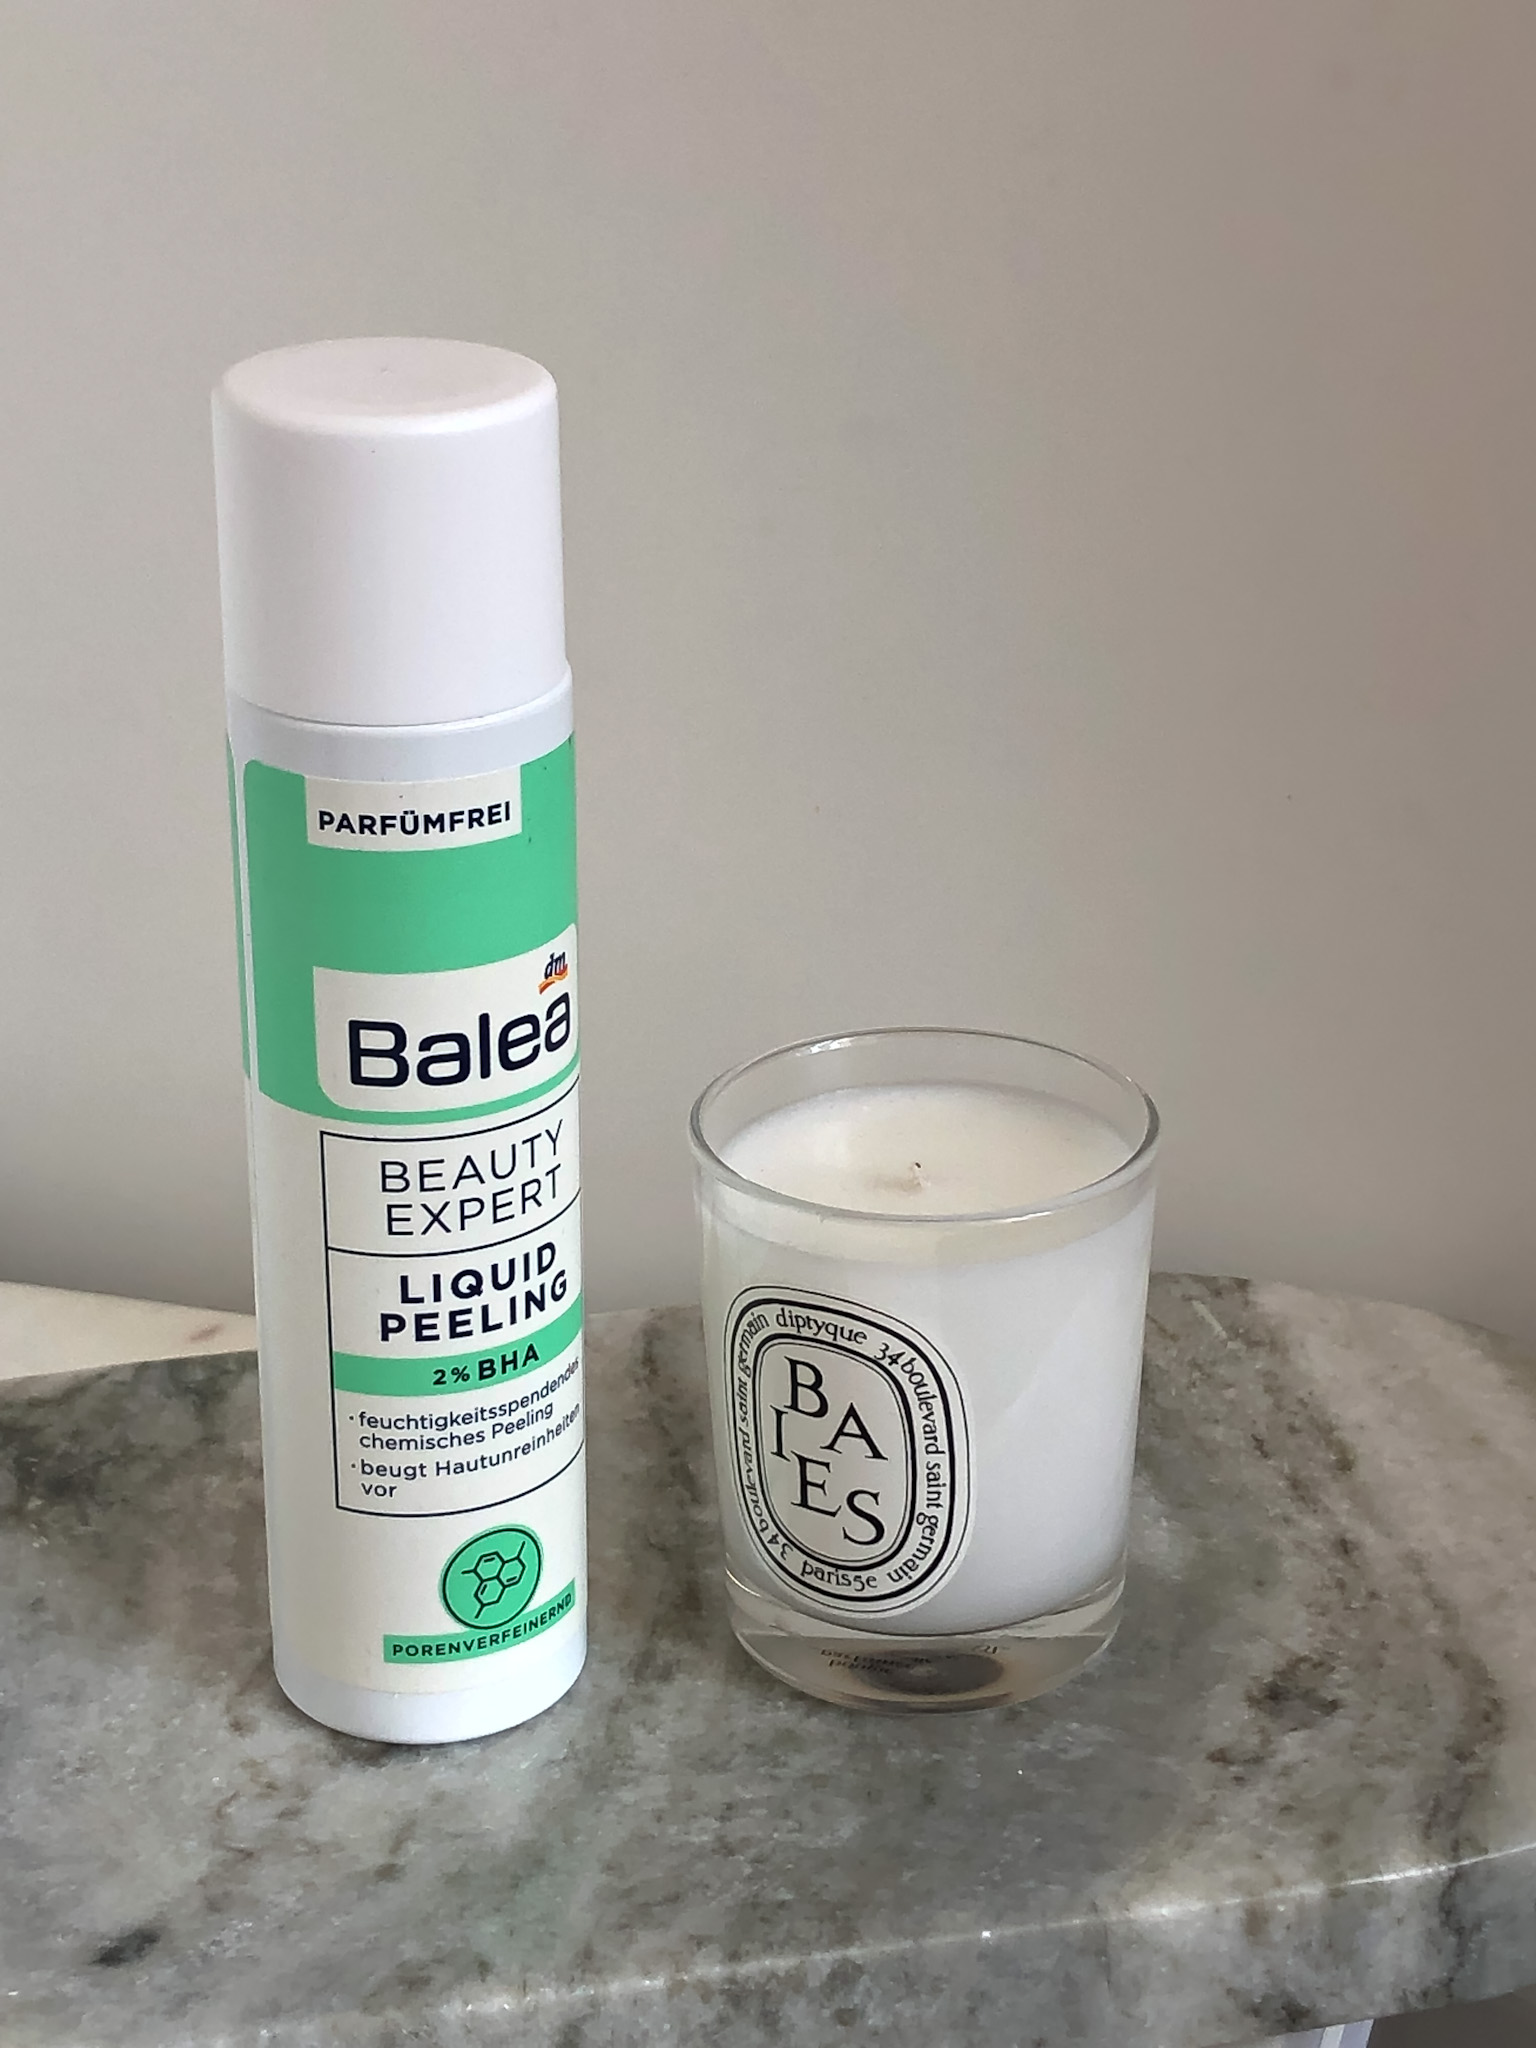 Balea Beauty Expert tekući piling s BHA kiselinama